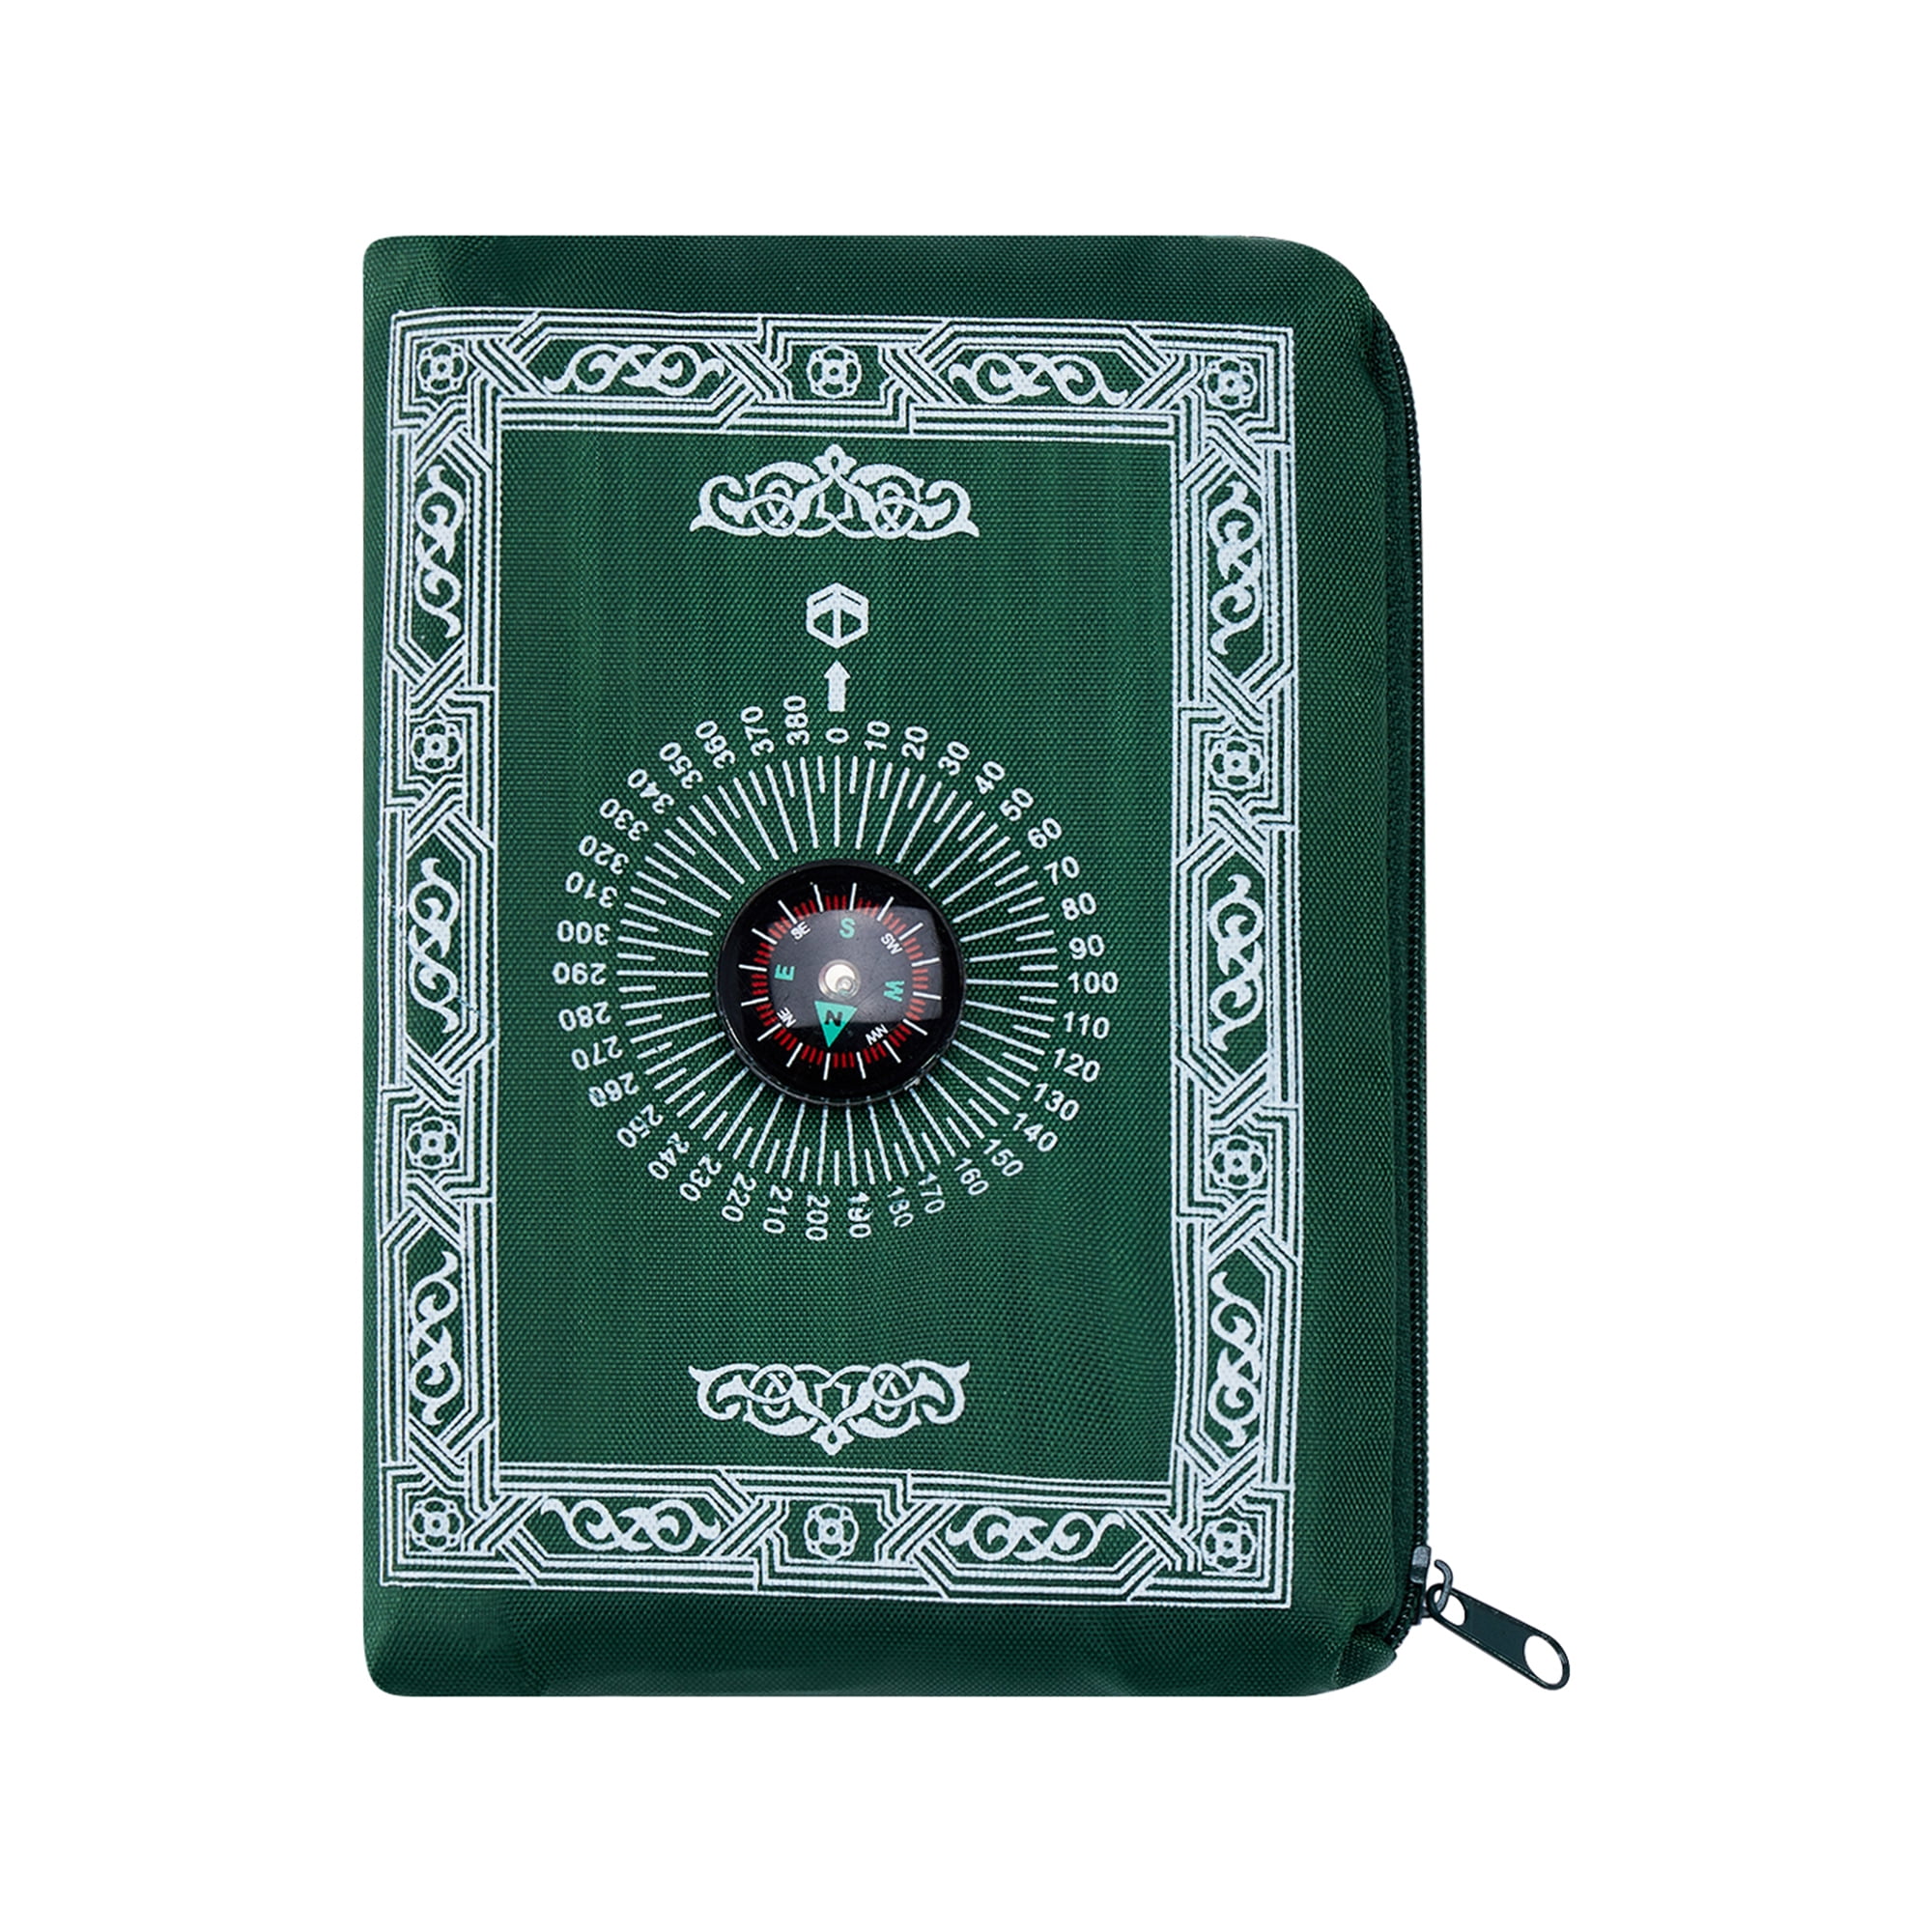 Modderig geur Boom Prayer Rug with Compass, Muslim Travel Prayer Mat, 60x100cm Portable Muslim  Prayer Blanket - Walmart.com